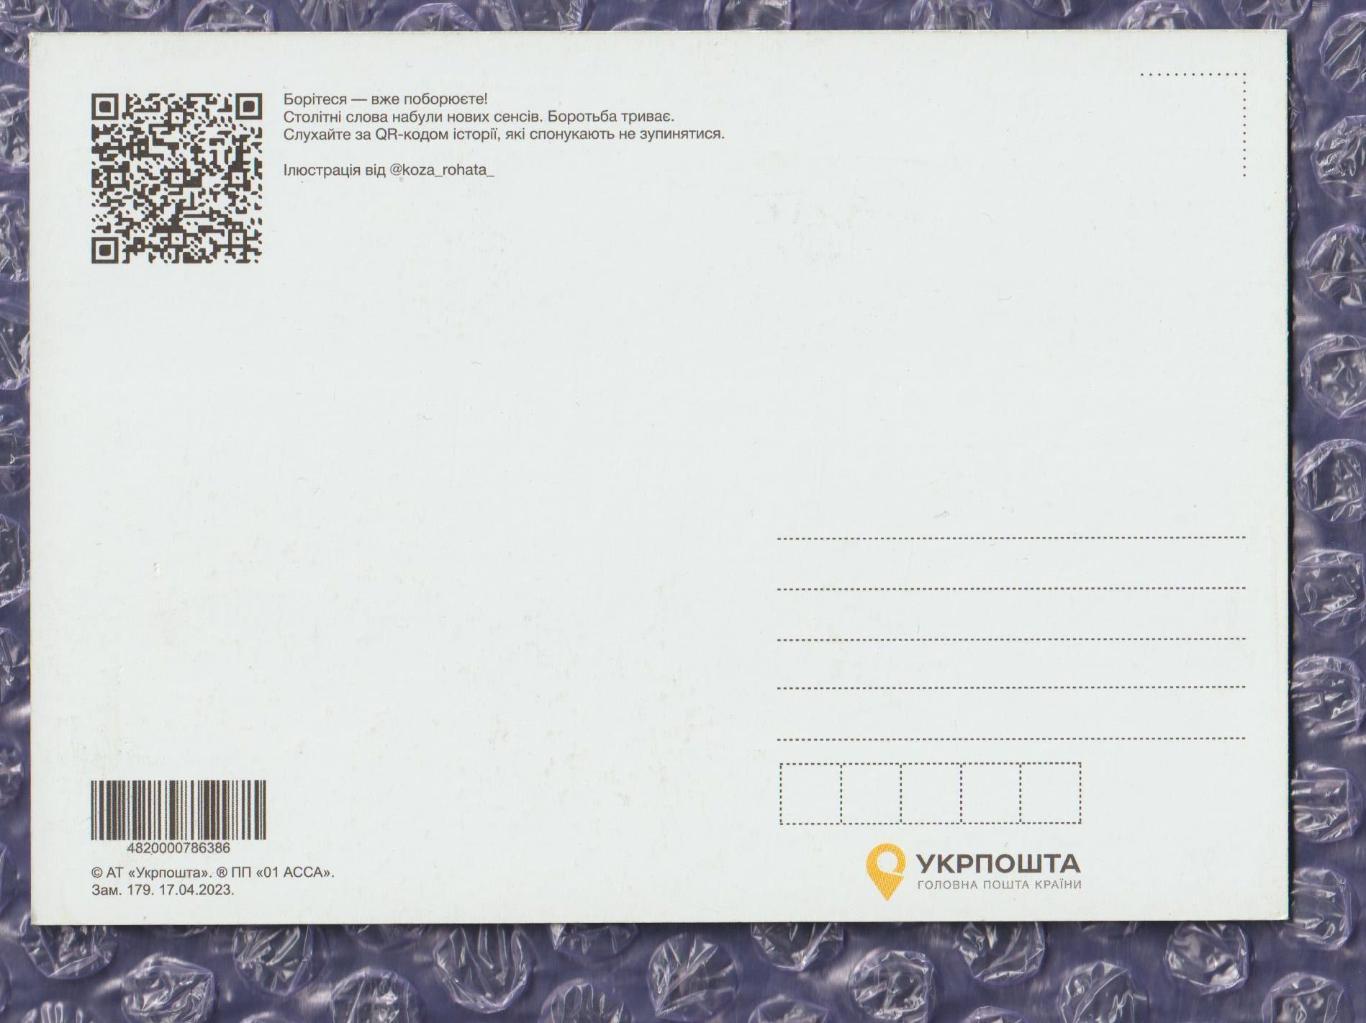 Поштова картка АТ УкрПошта 17.04.2023 1